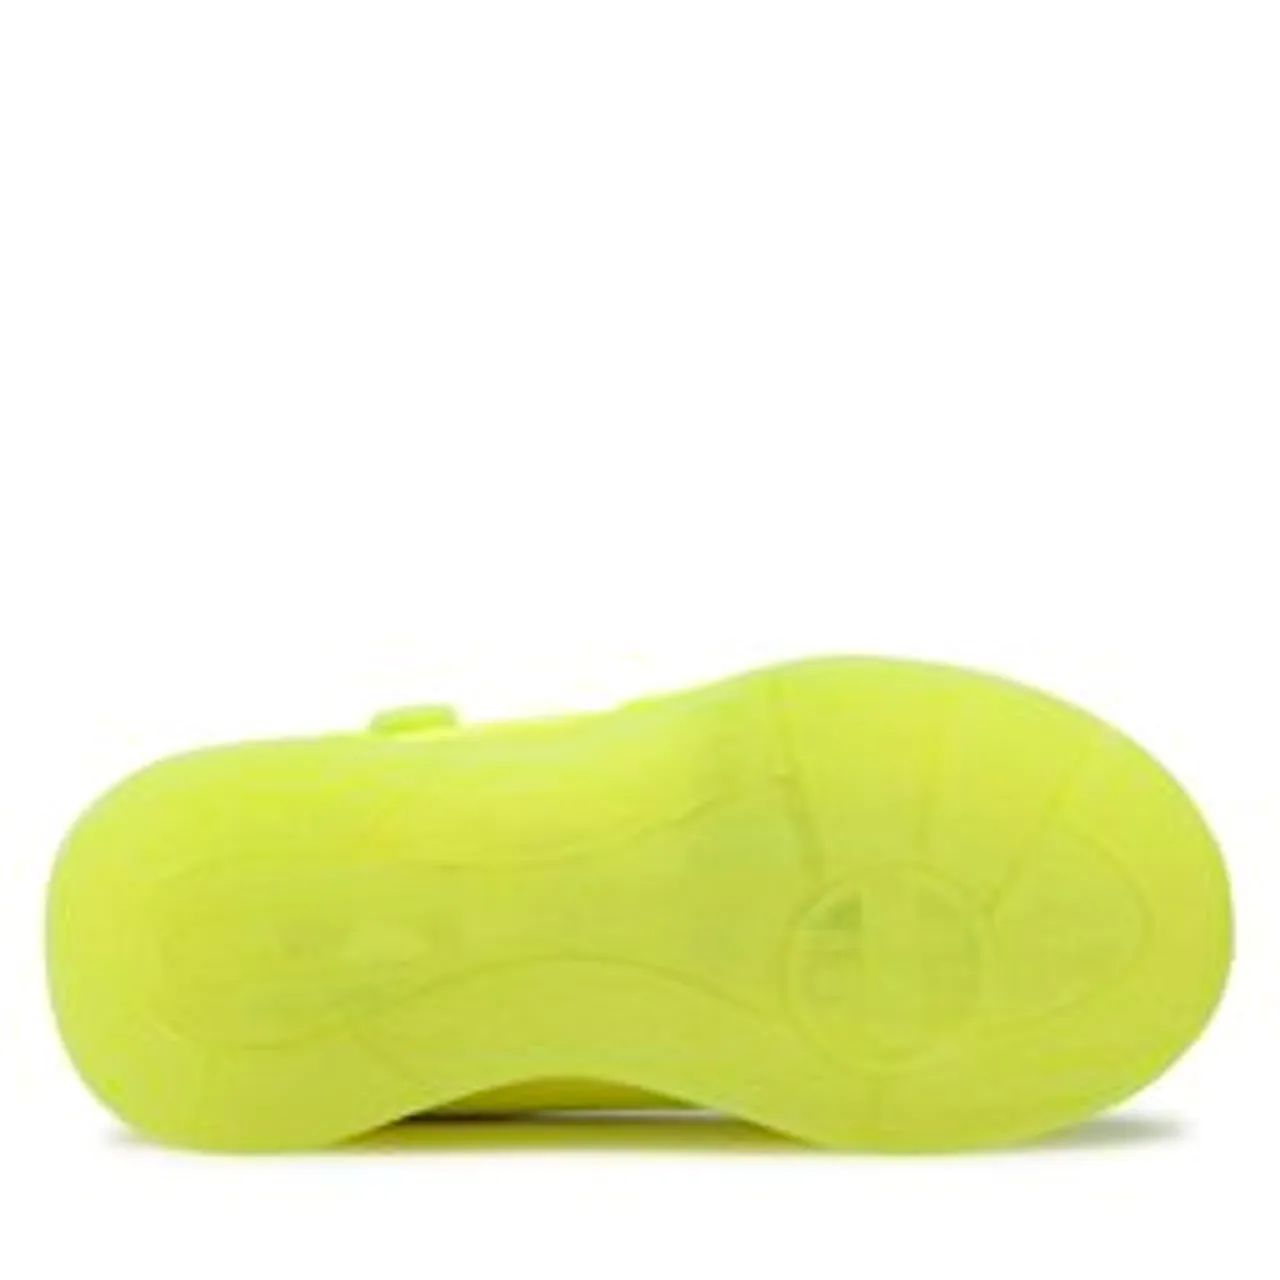 Sneakers Skechers S-Lights Remix 310100L/NYEL Neon/Yellow